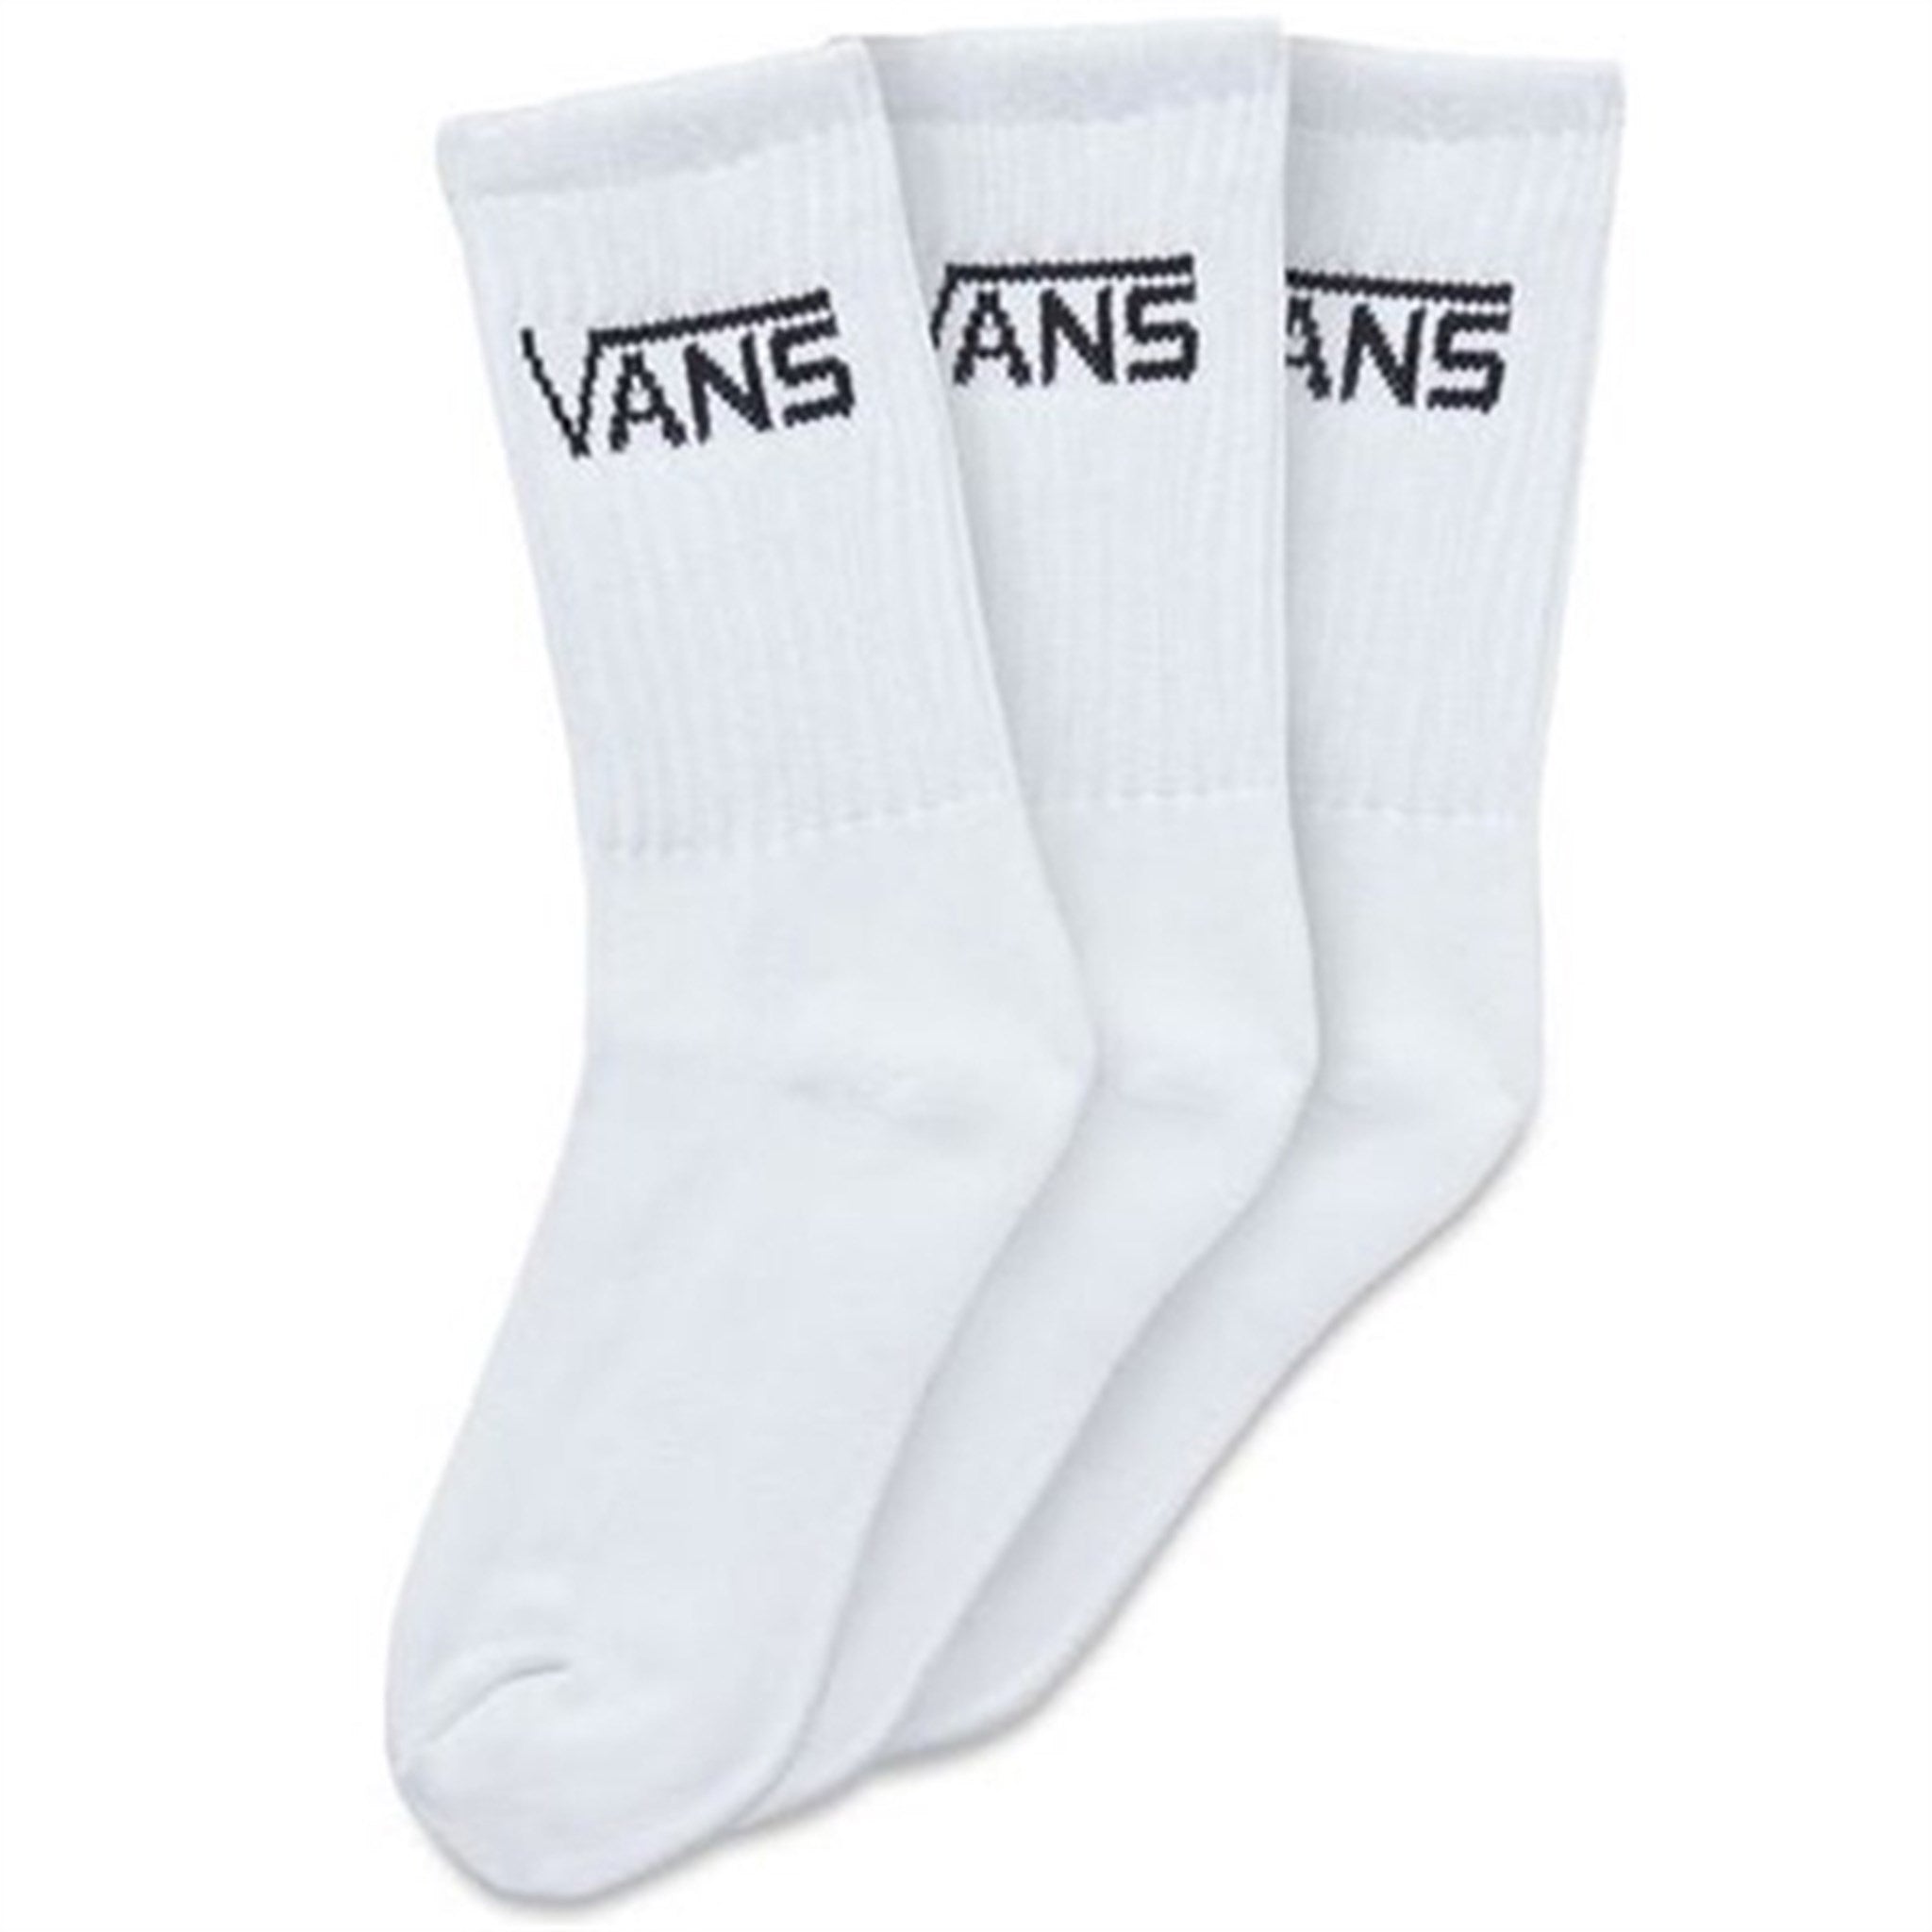 VANS By Classic Crew Boys Socks White